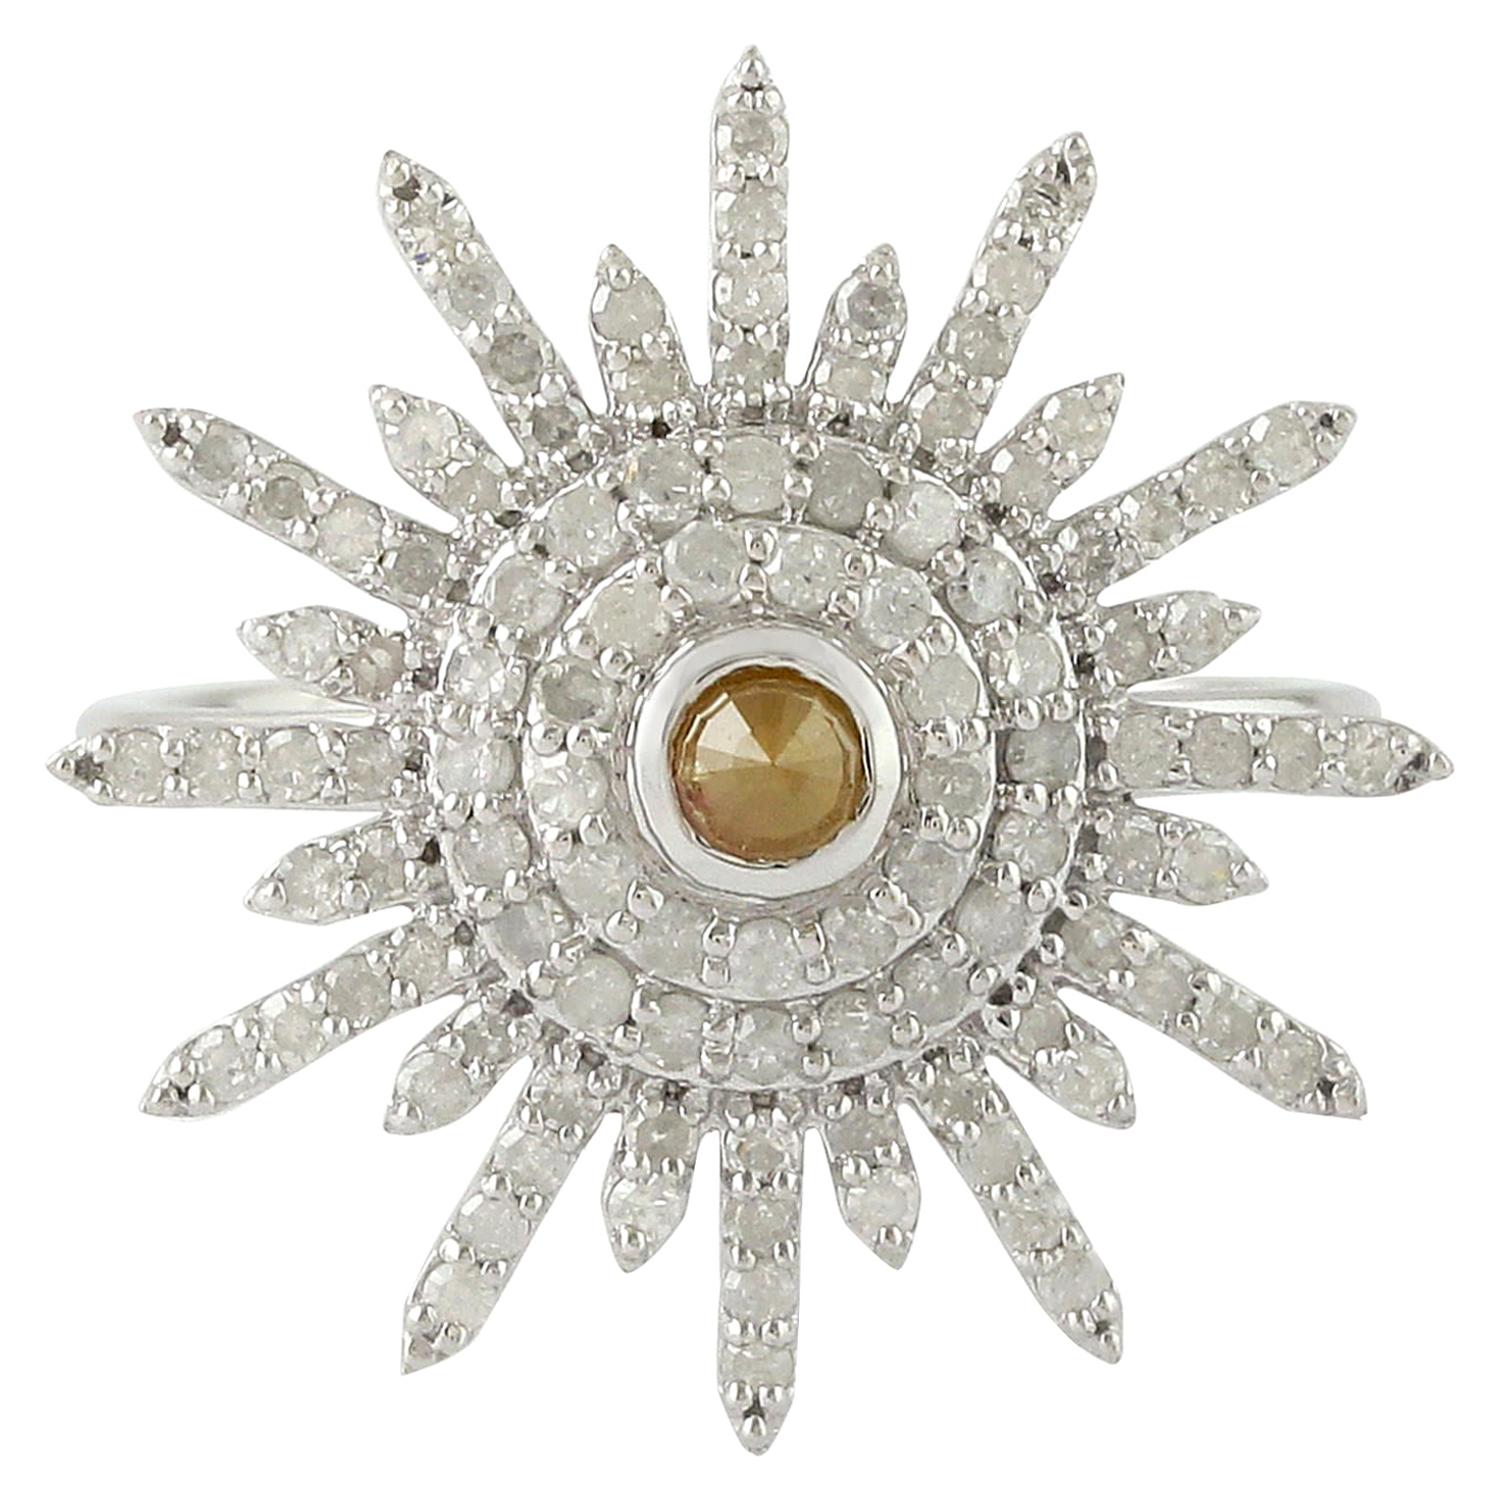 14 Karat White Gold 0.90 Carat Diamond Pave Cocktail Ring Flower Design Jewelry